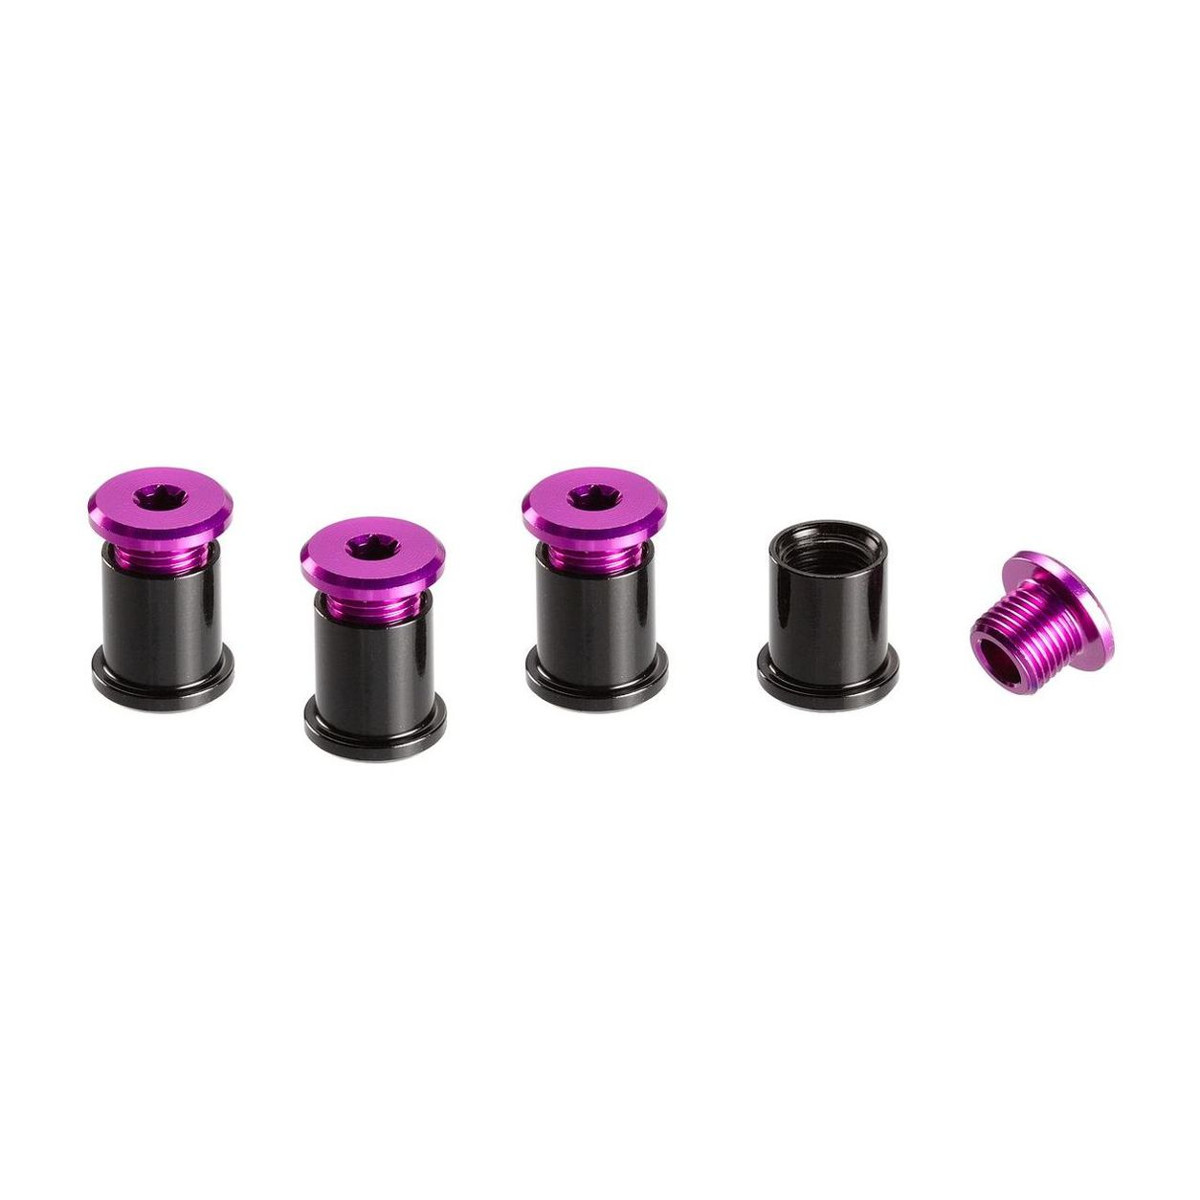 E*thirteen Chainring Bolts  Purple, Aluminium, T25 6 mm Screws/ T30 11 mm Nuts, 4 pcs each